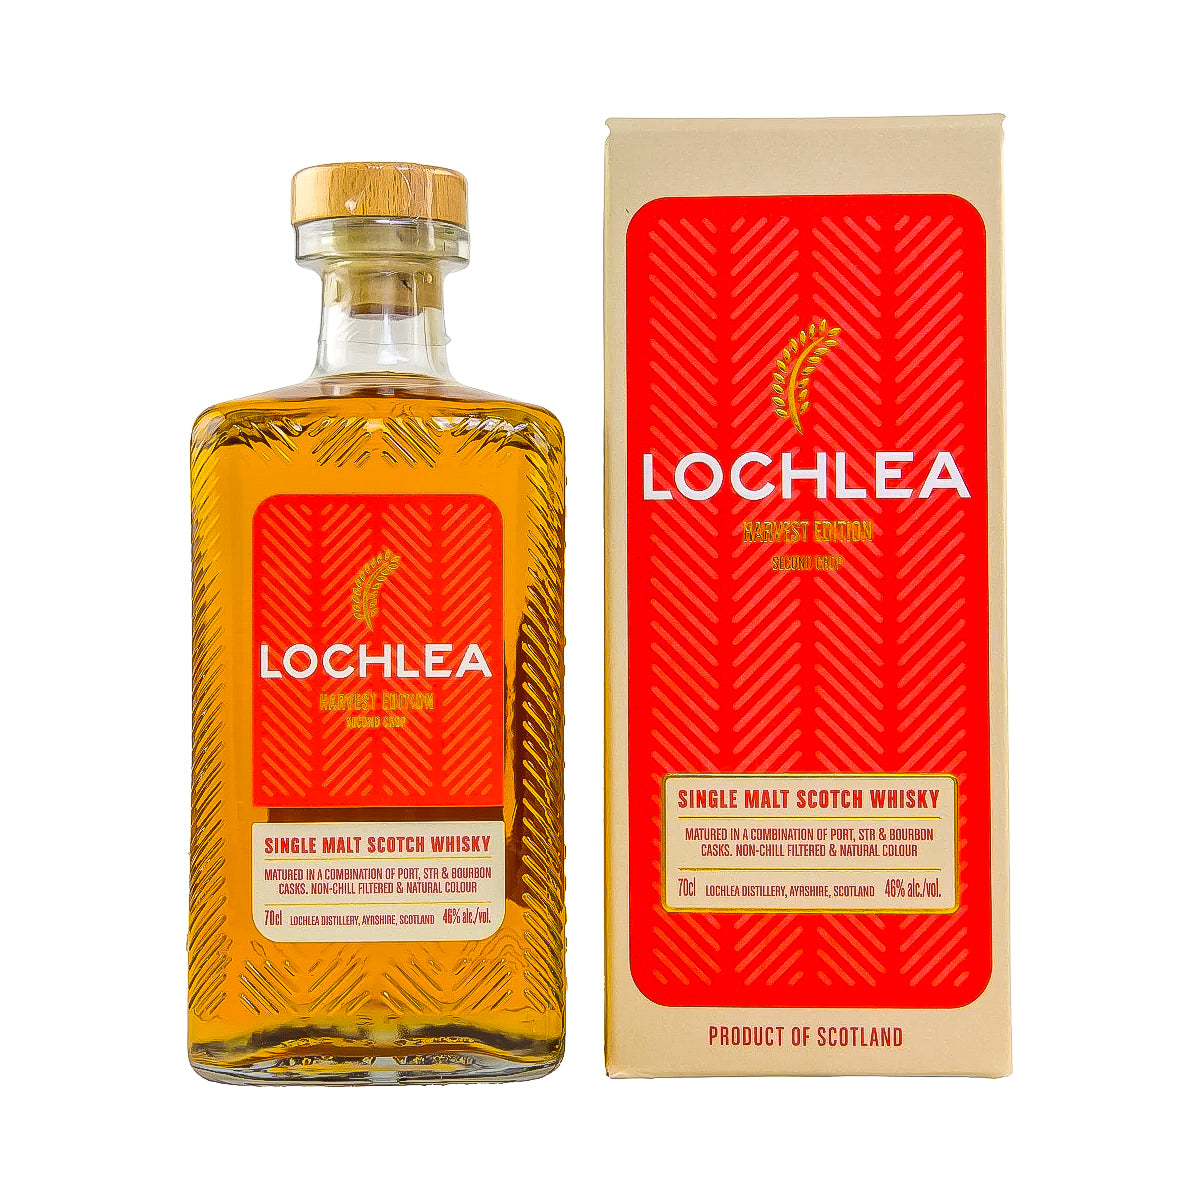 Lochlea Harvest Edition (Second Crop)